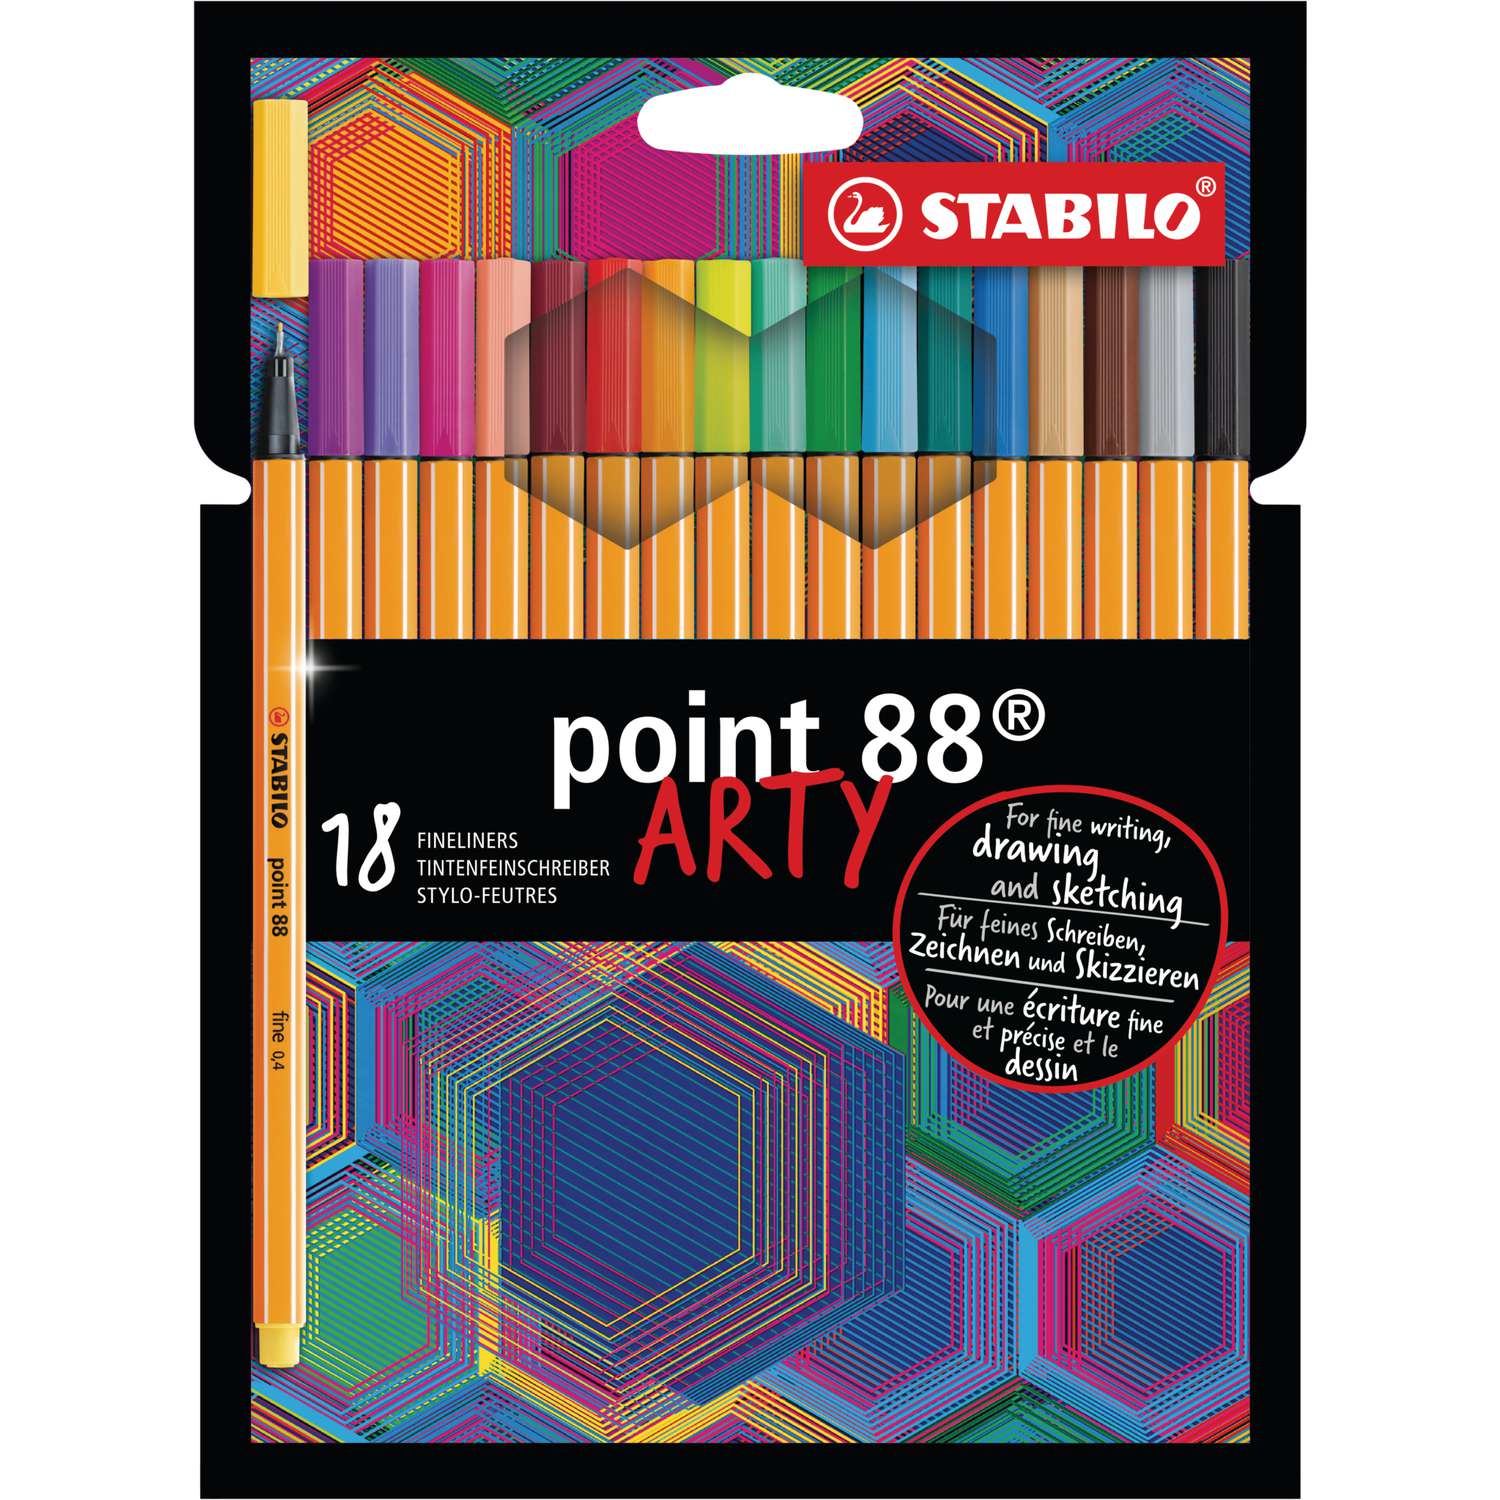 Juegos de rotuladores STABILO® point 88 ARTY